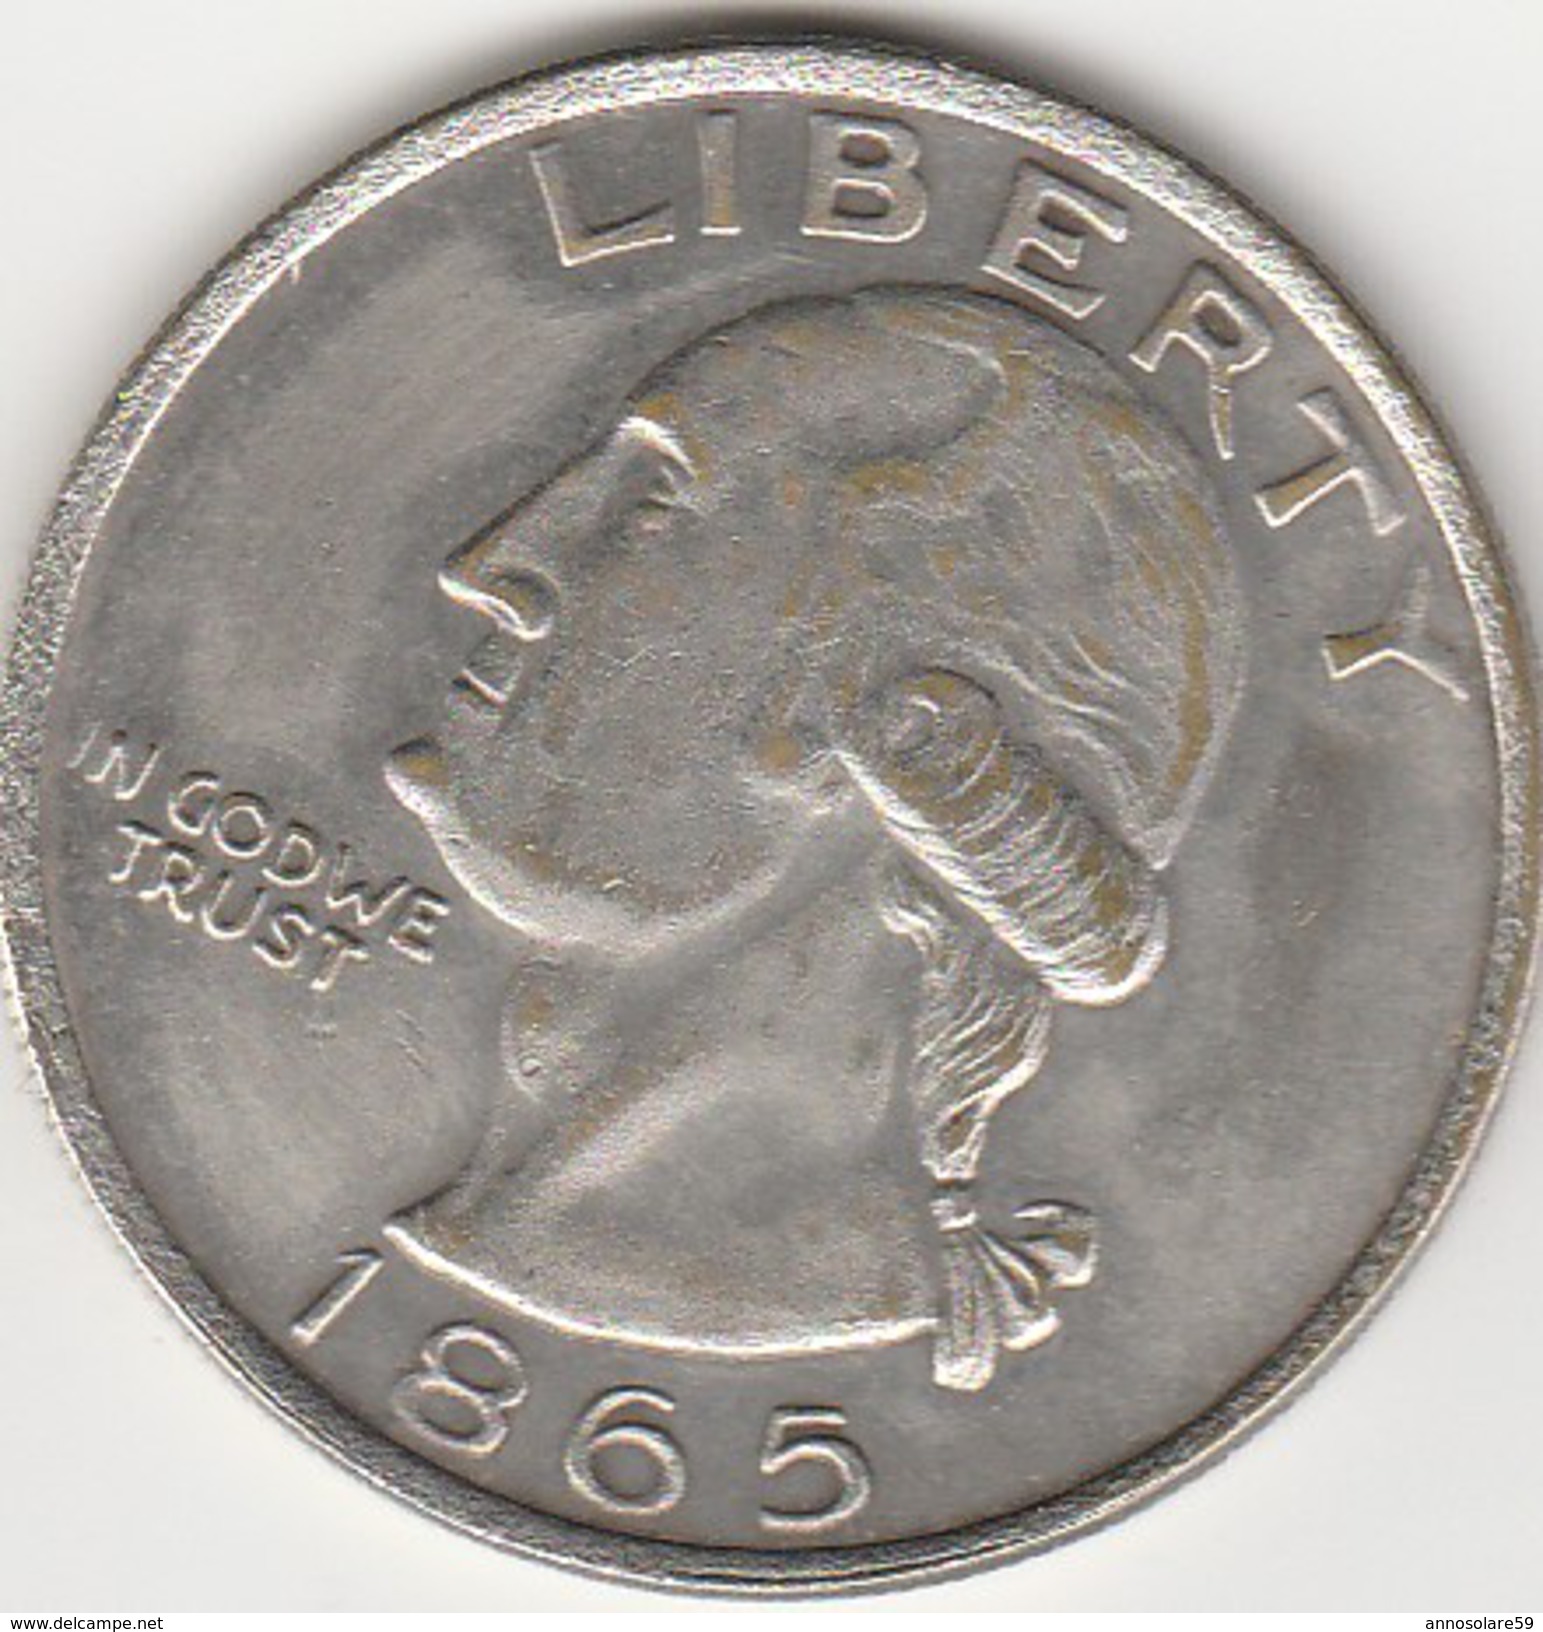 MONETA - ONE DOLLAR - UNITED STATES OF AMERICA - 1865 - LEGGI - Central America